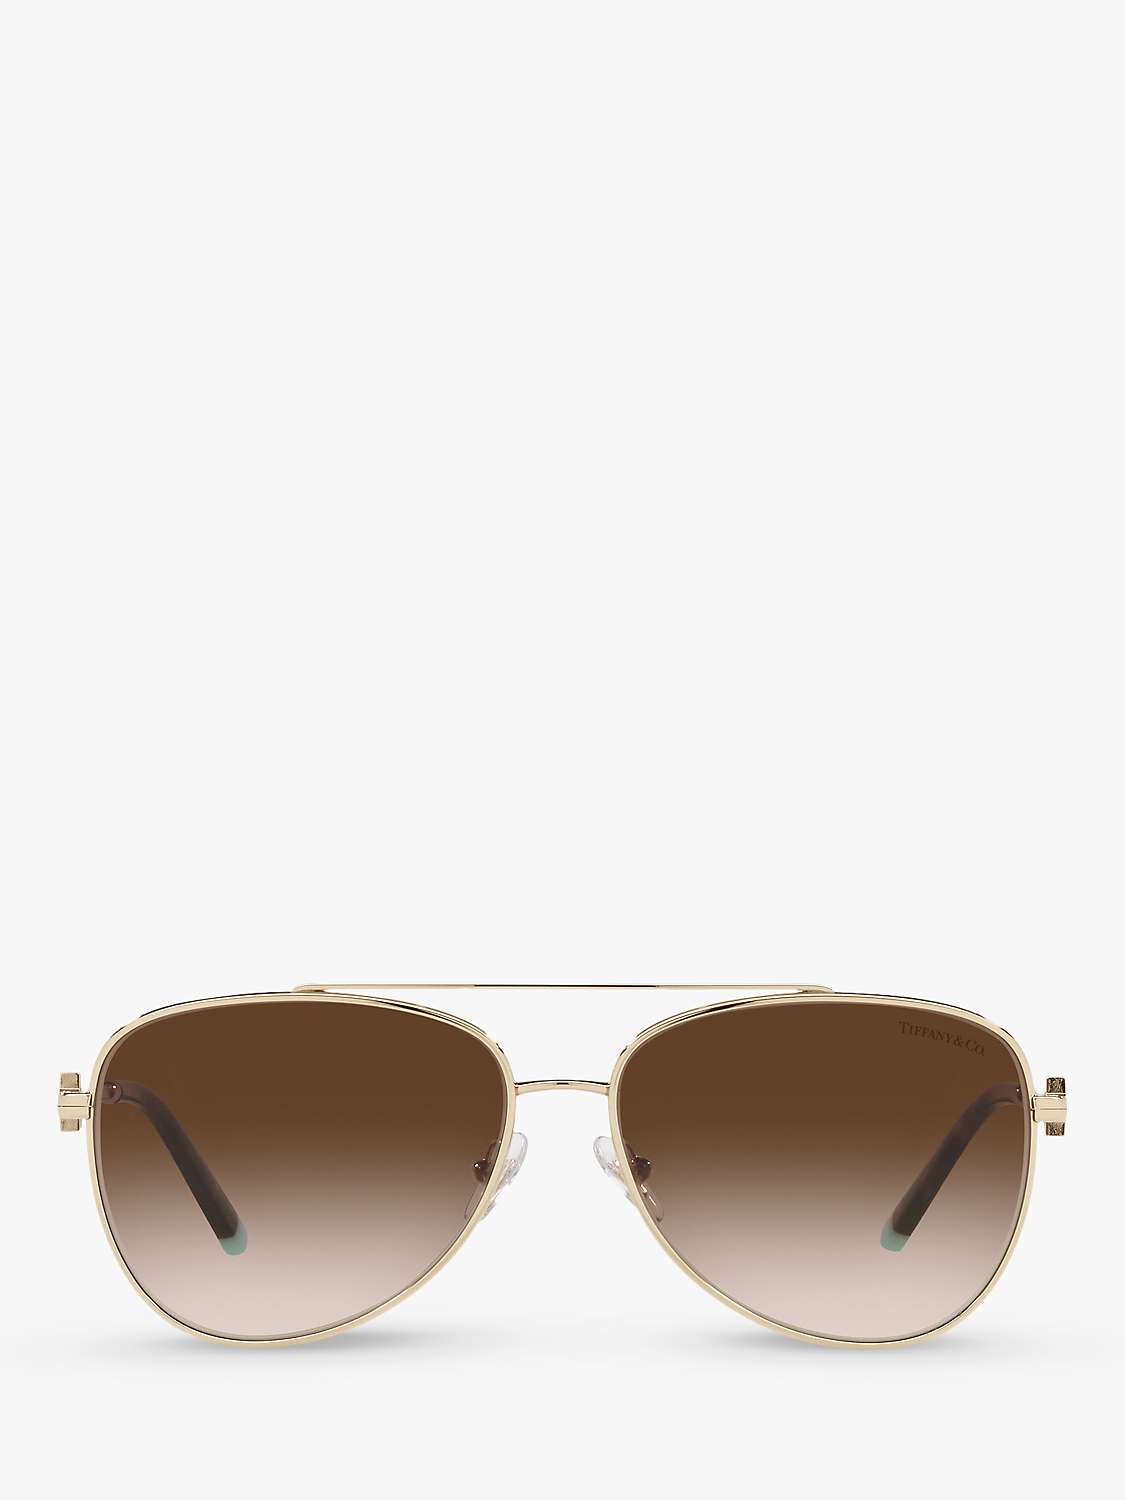 Buy Tiffany & Co TF3080 Women's Aviator Sunglasses Online at johnlewis.com